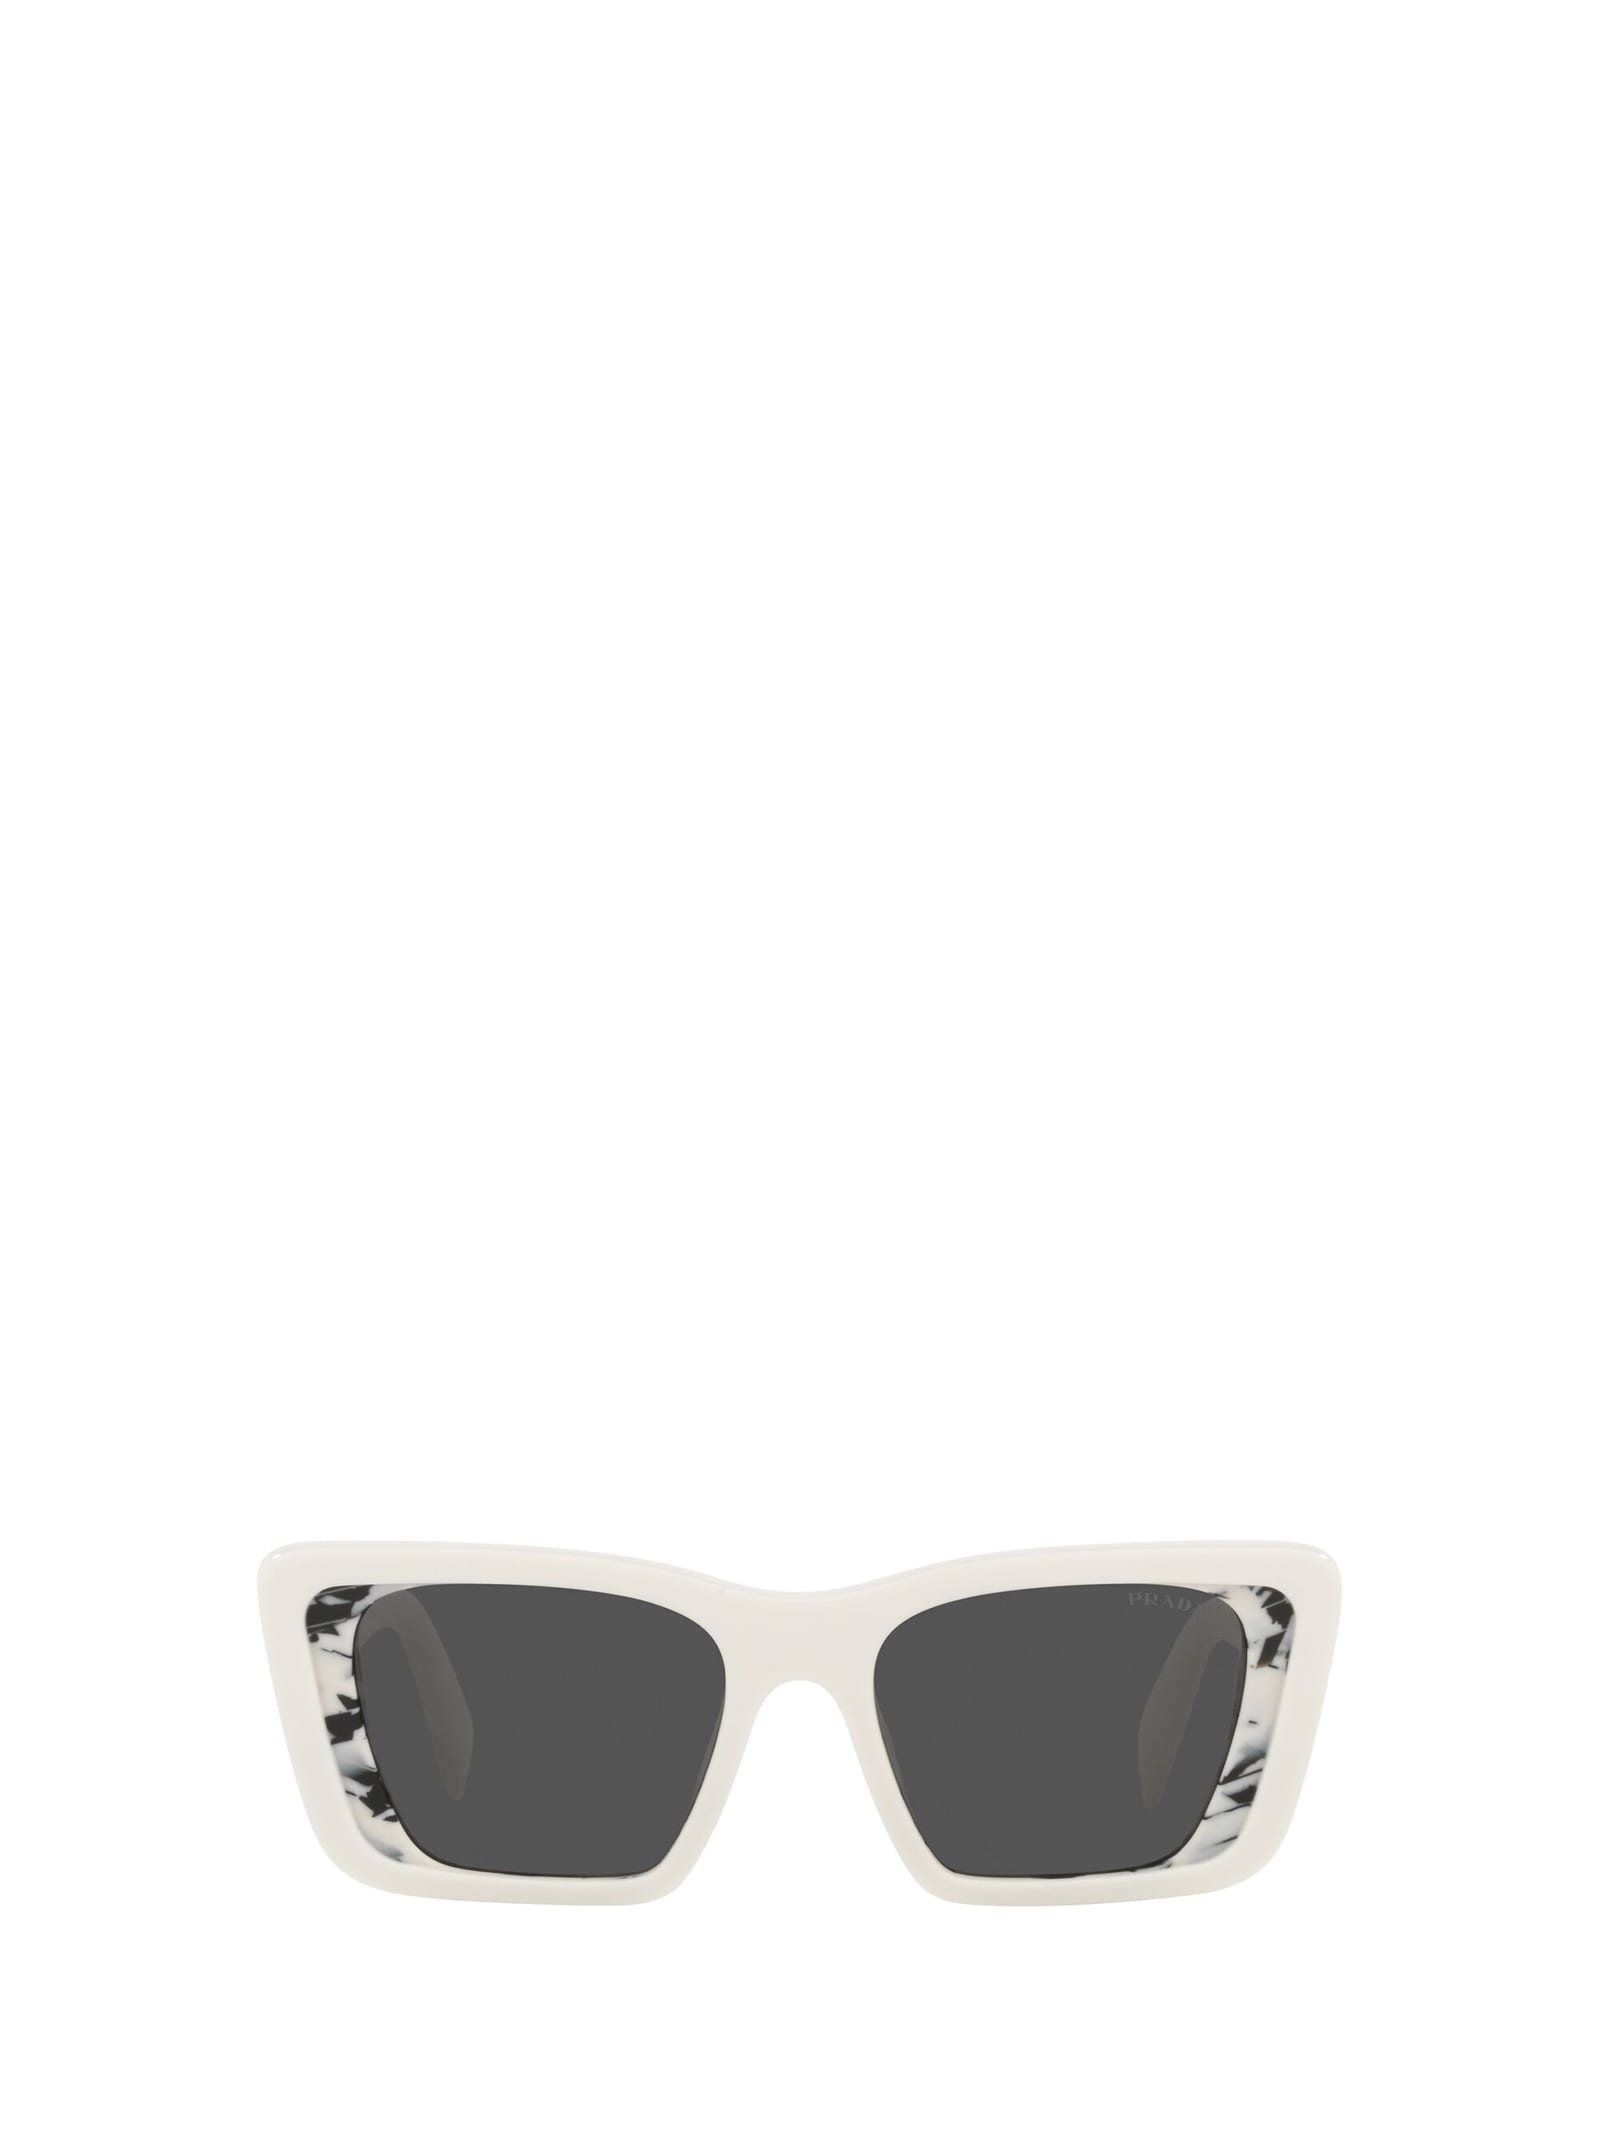 Prada Eyewear Pr 08ys White / Havana Black Sunglasses